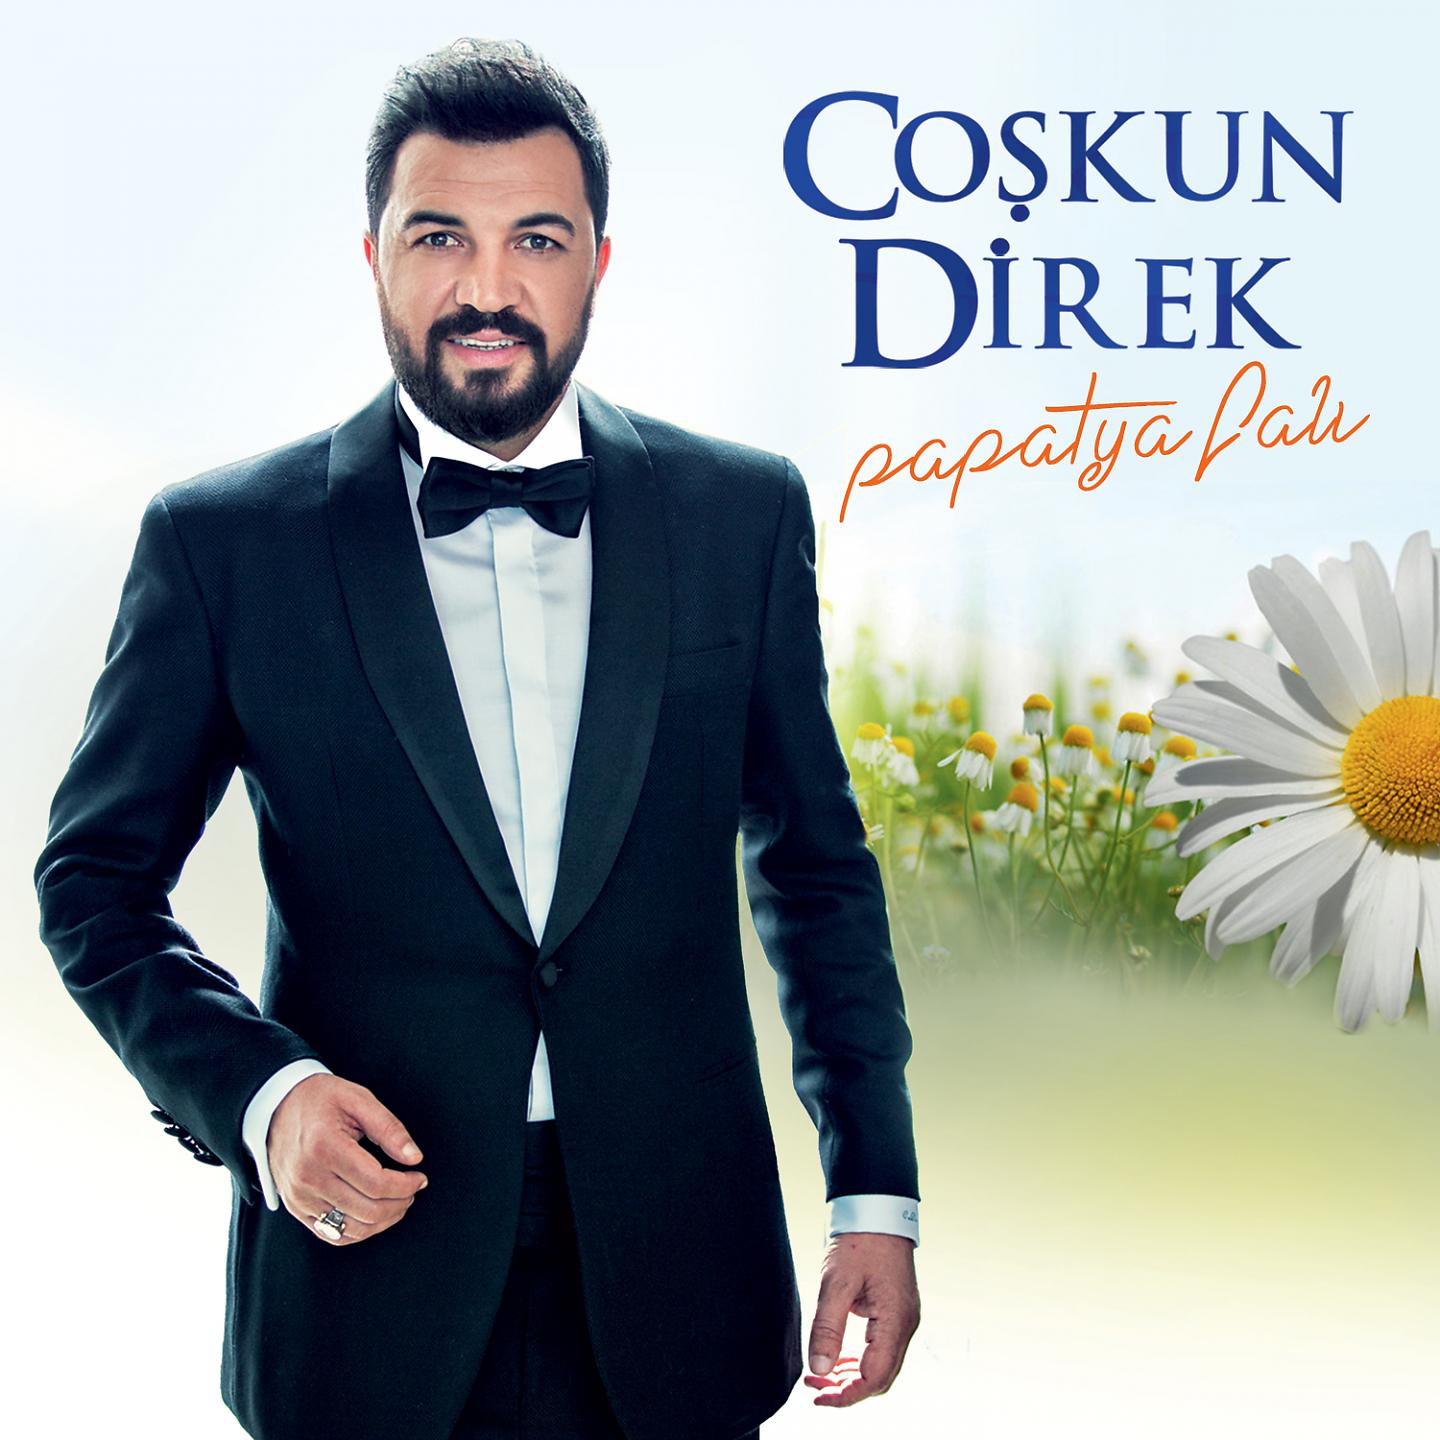 Постер альбома Papatya Falı